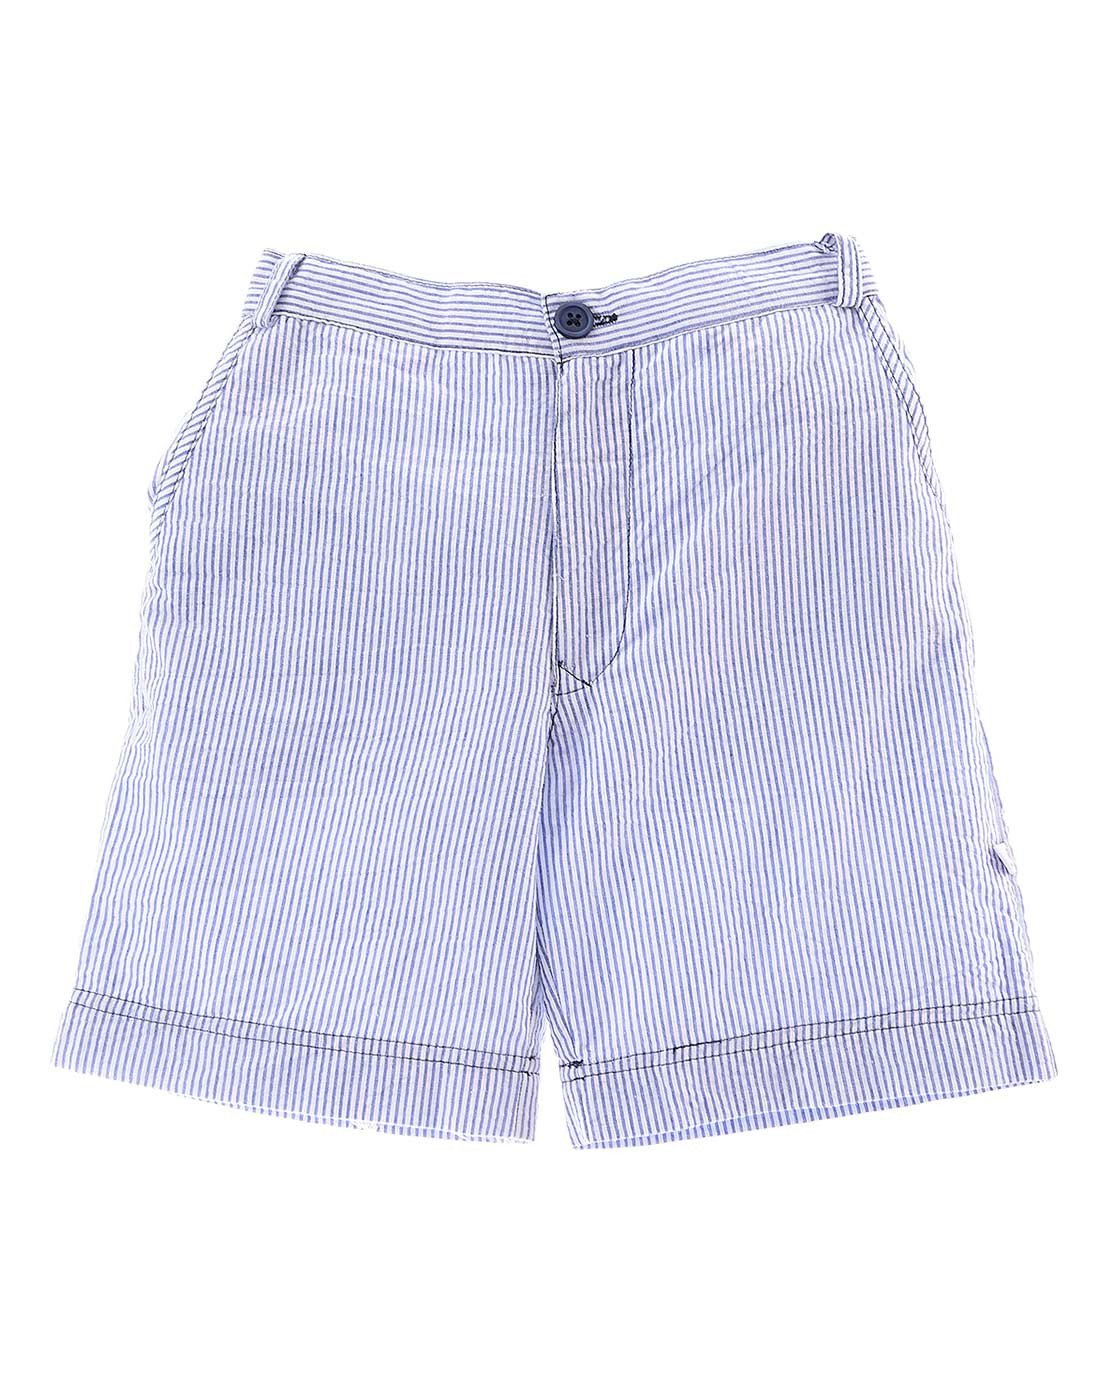 The Sumer - Boys Blue & White Seersucker Shorts